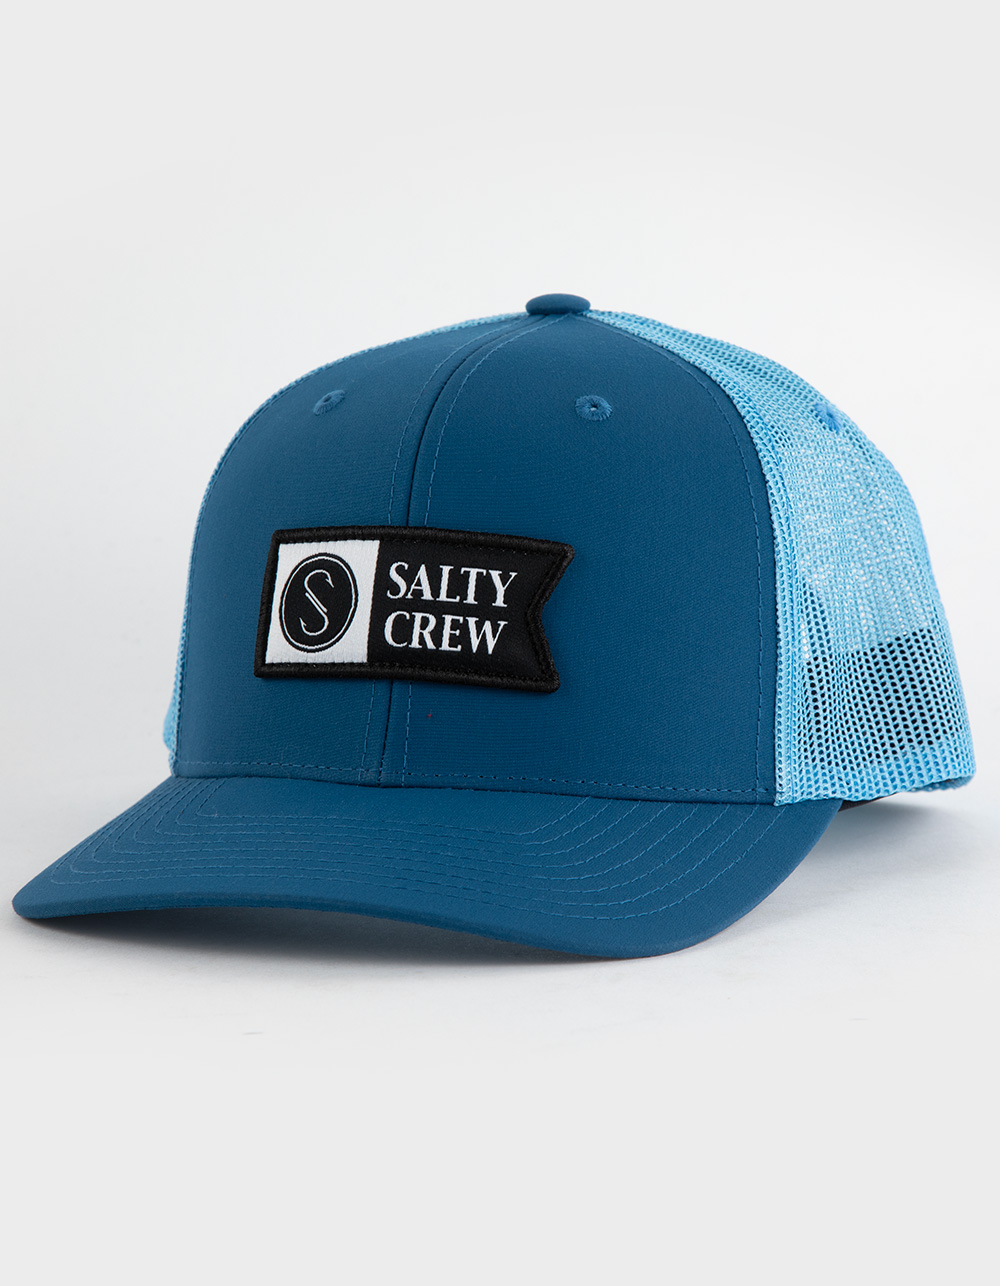 SALTY CREW Pinnacle 2 Retro Mens Trucker Hat